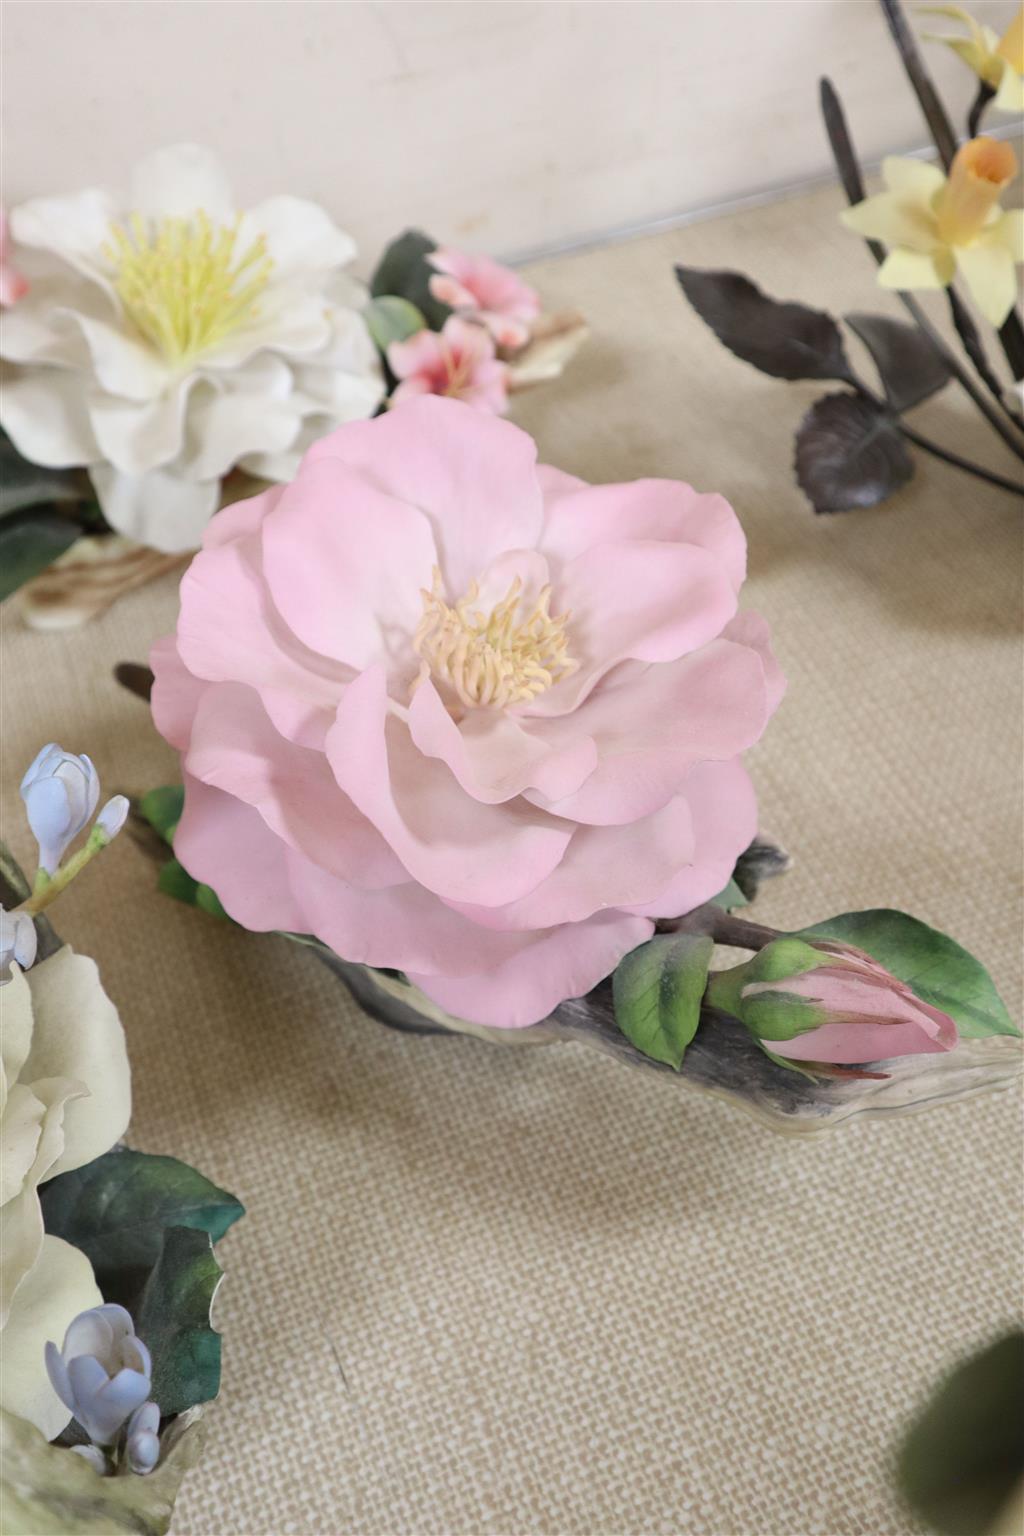 Five Boehm porcelain flower groups - Blue Nile Rose no.183, Pelargonium no.42, Pascal Rose with Freisas no.195, Annenberg Rose